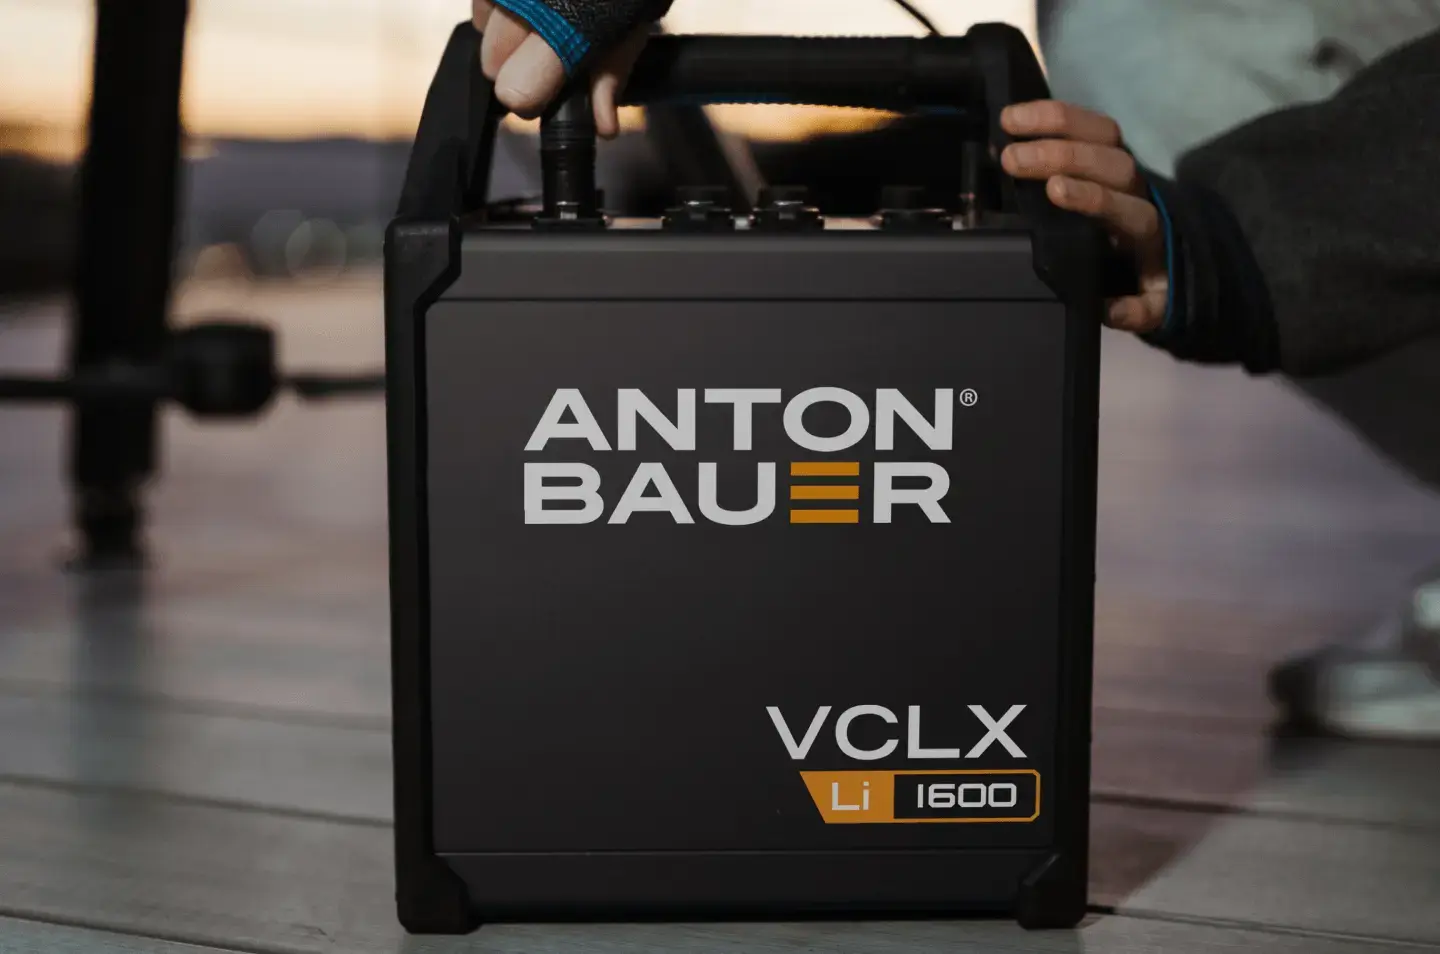 Anton/Bauer has launched the VCLX LI 1600